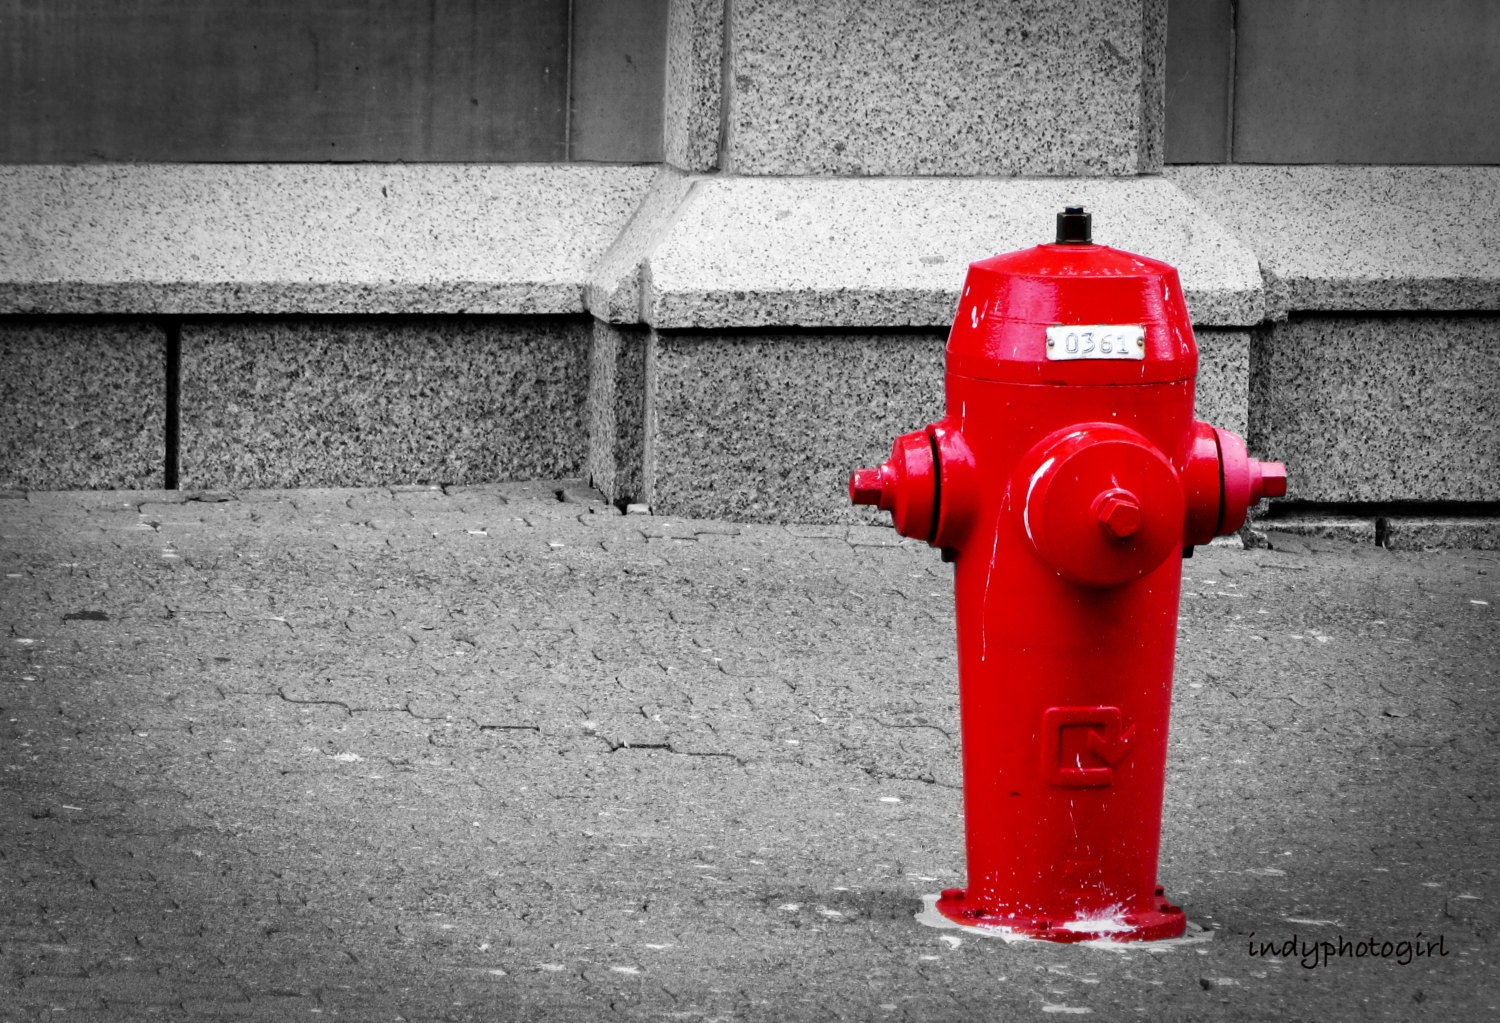 Canada Street Fire hydrant Canadian Wall Art 5x7 Photograph Wall Art - IndyPhotoGirl